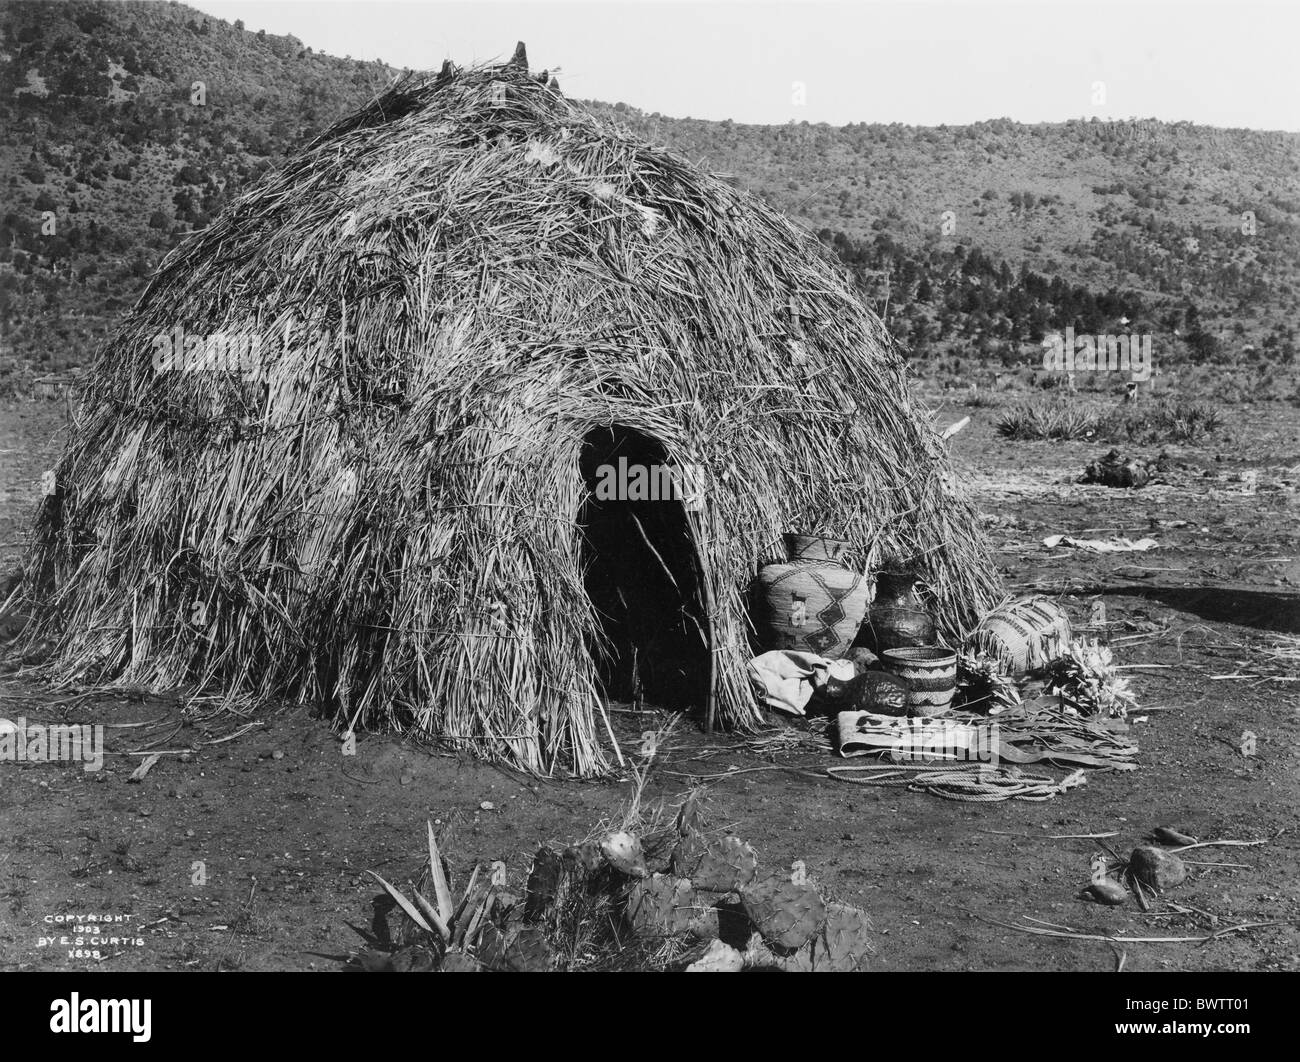 USA America United States North America United States of America Indians Apache Wickiup primitive hut histori Stock Photo